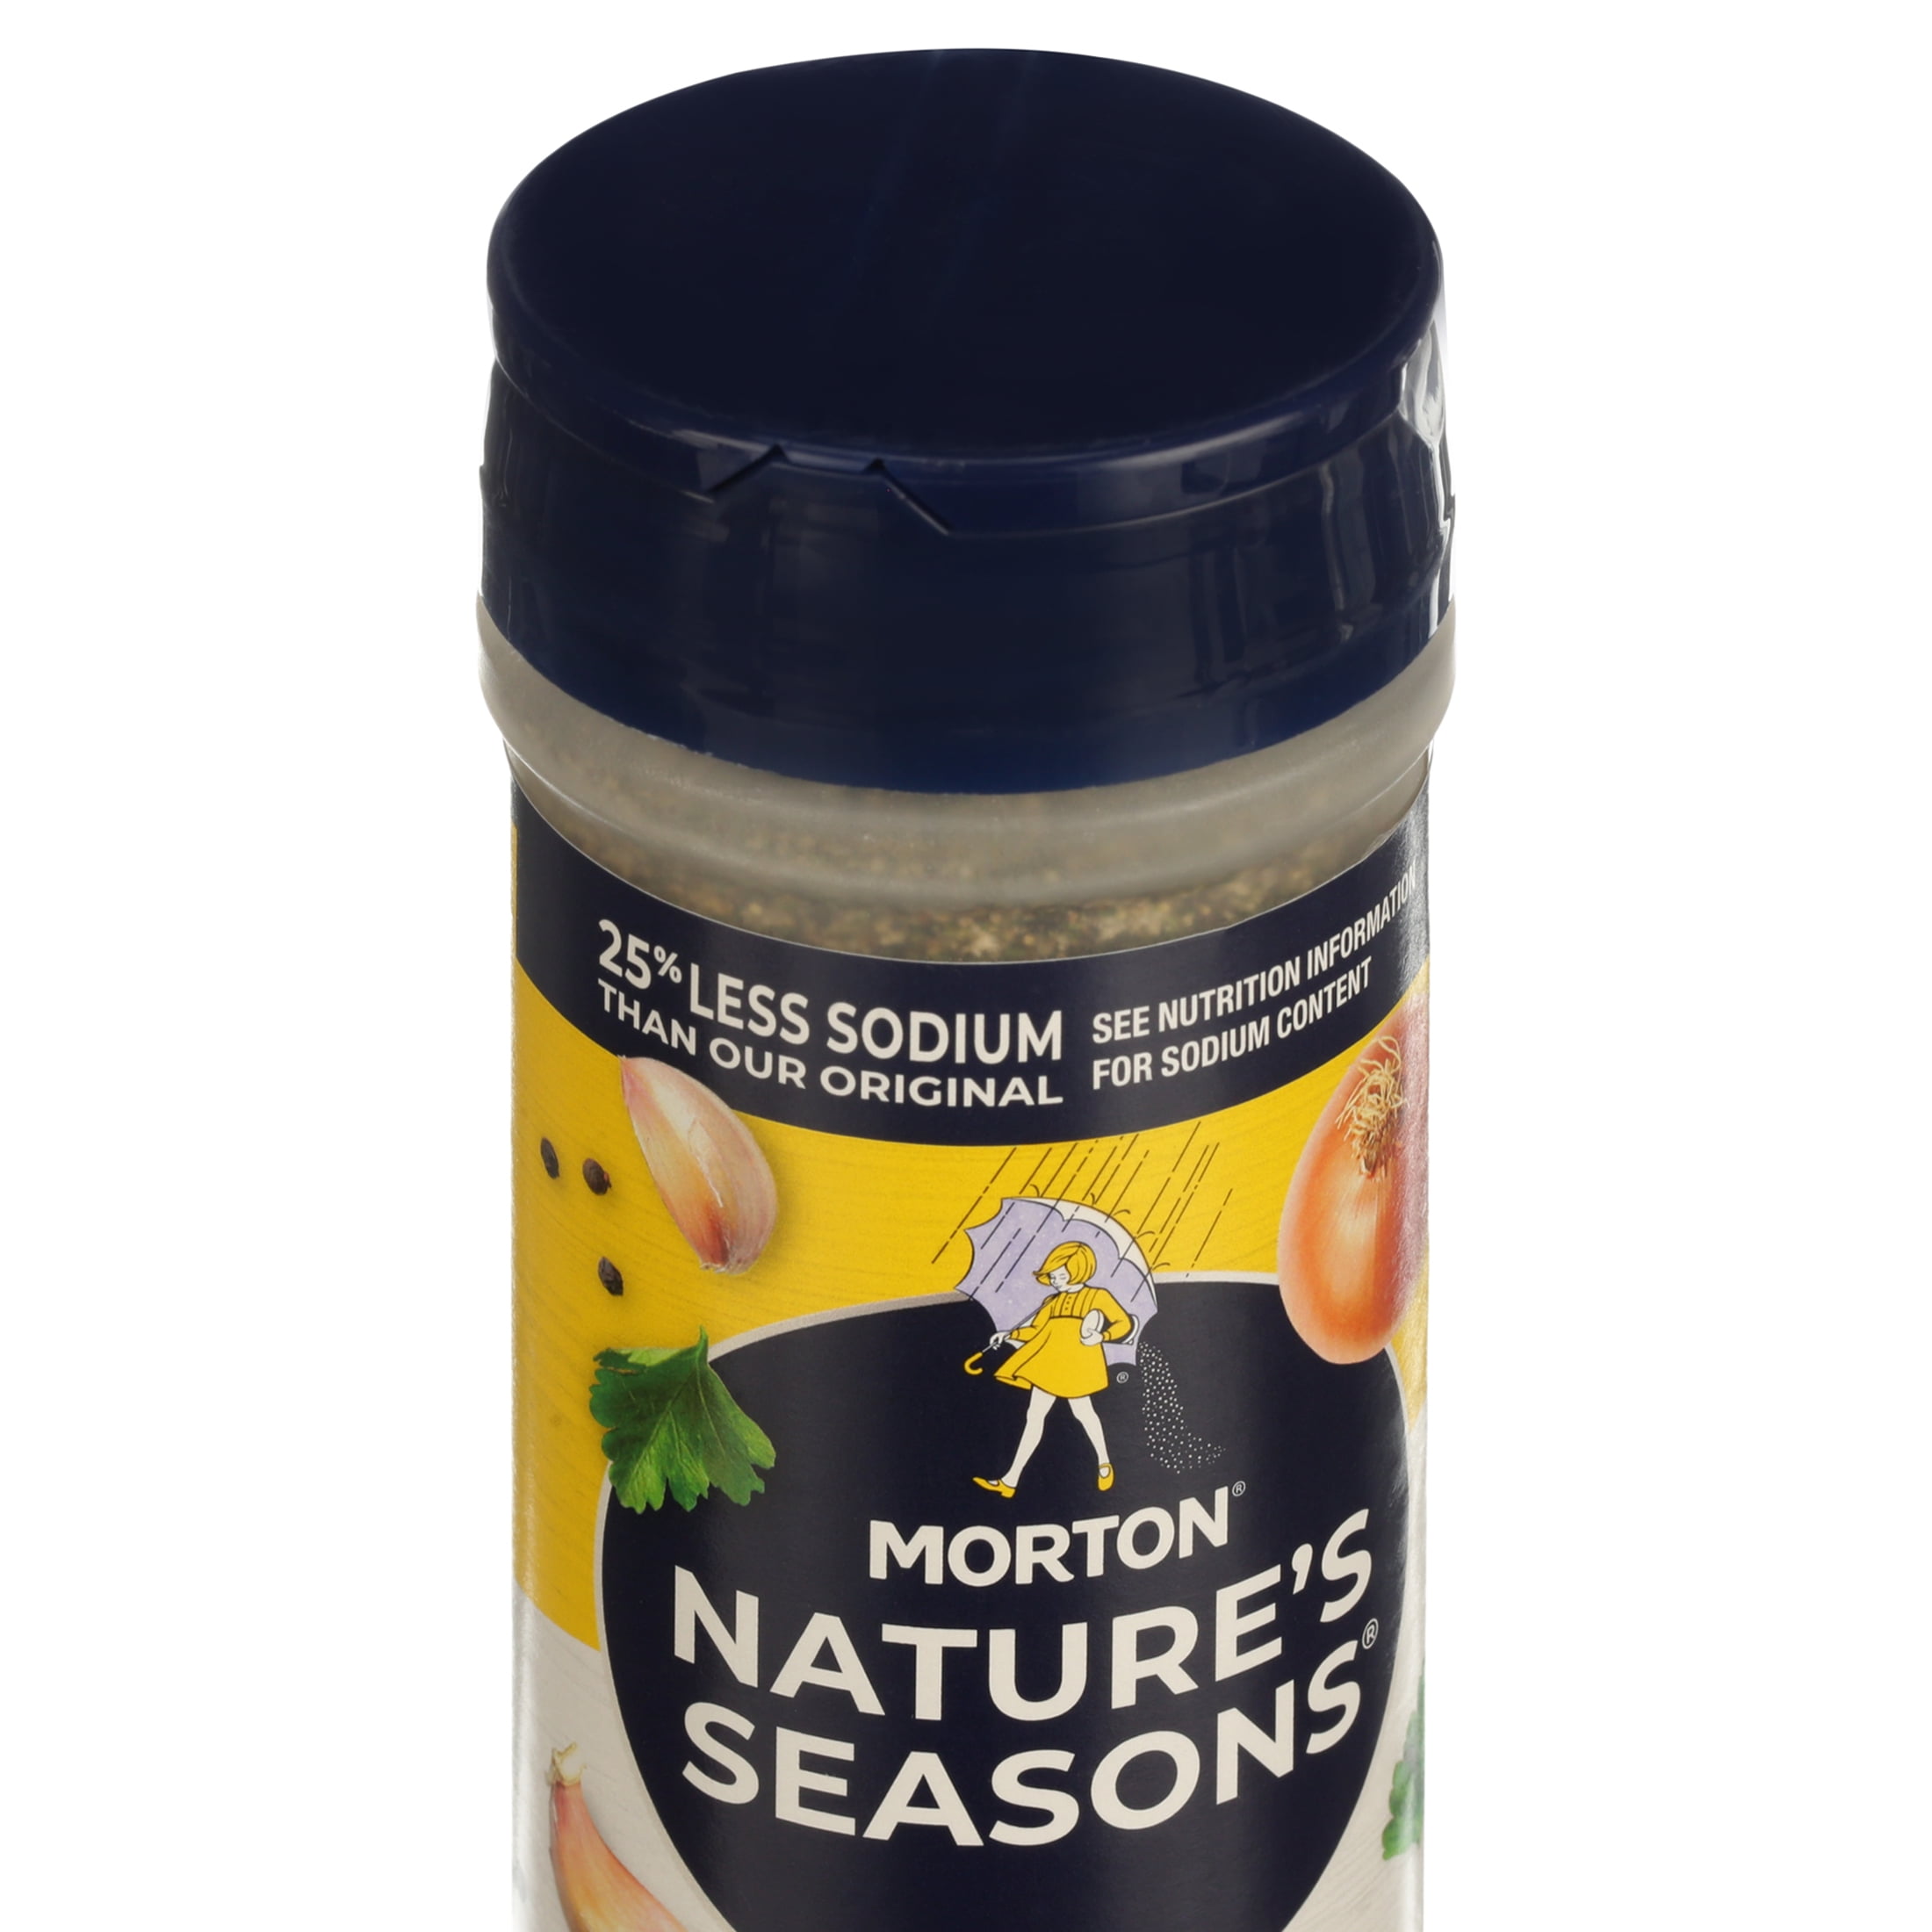  Morton 25% Less Sodium Nature's Seasons Seasoning